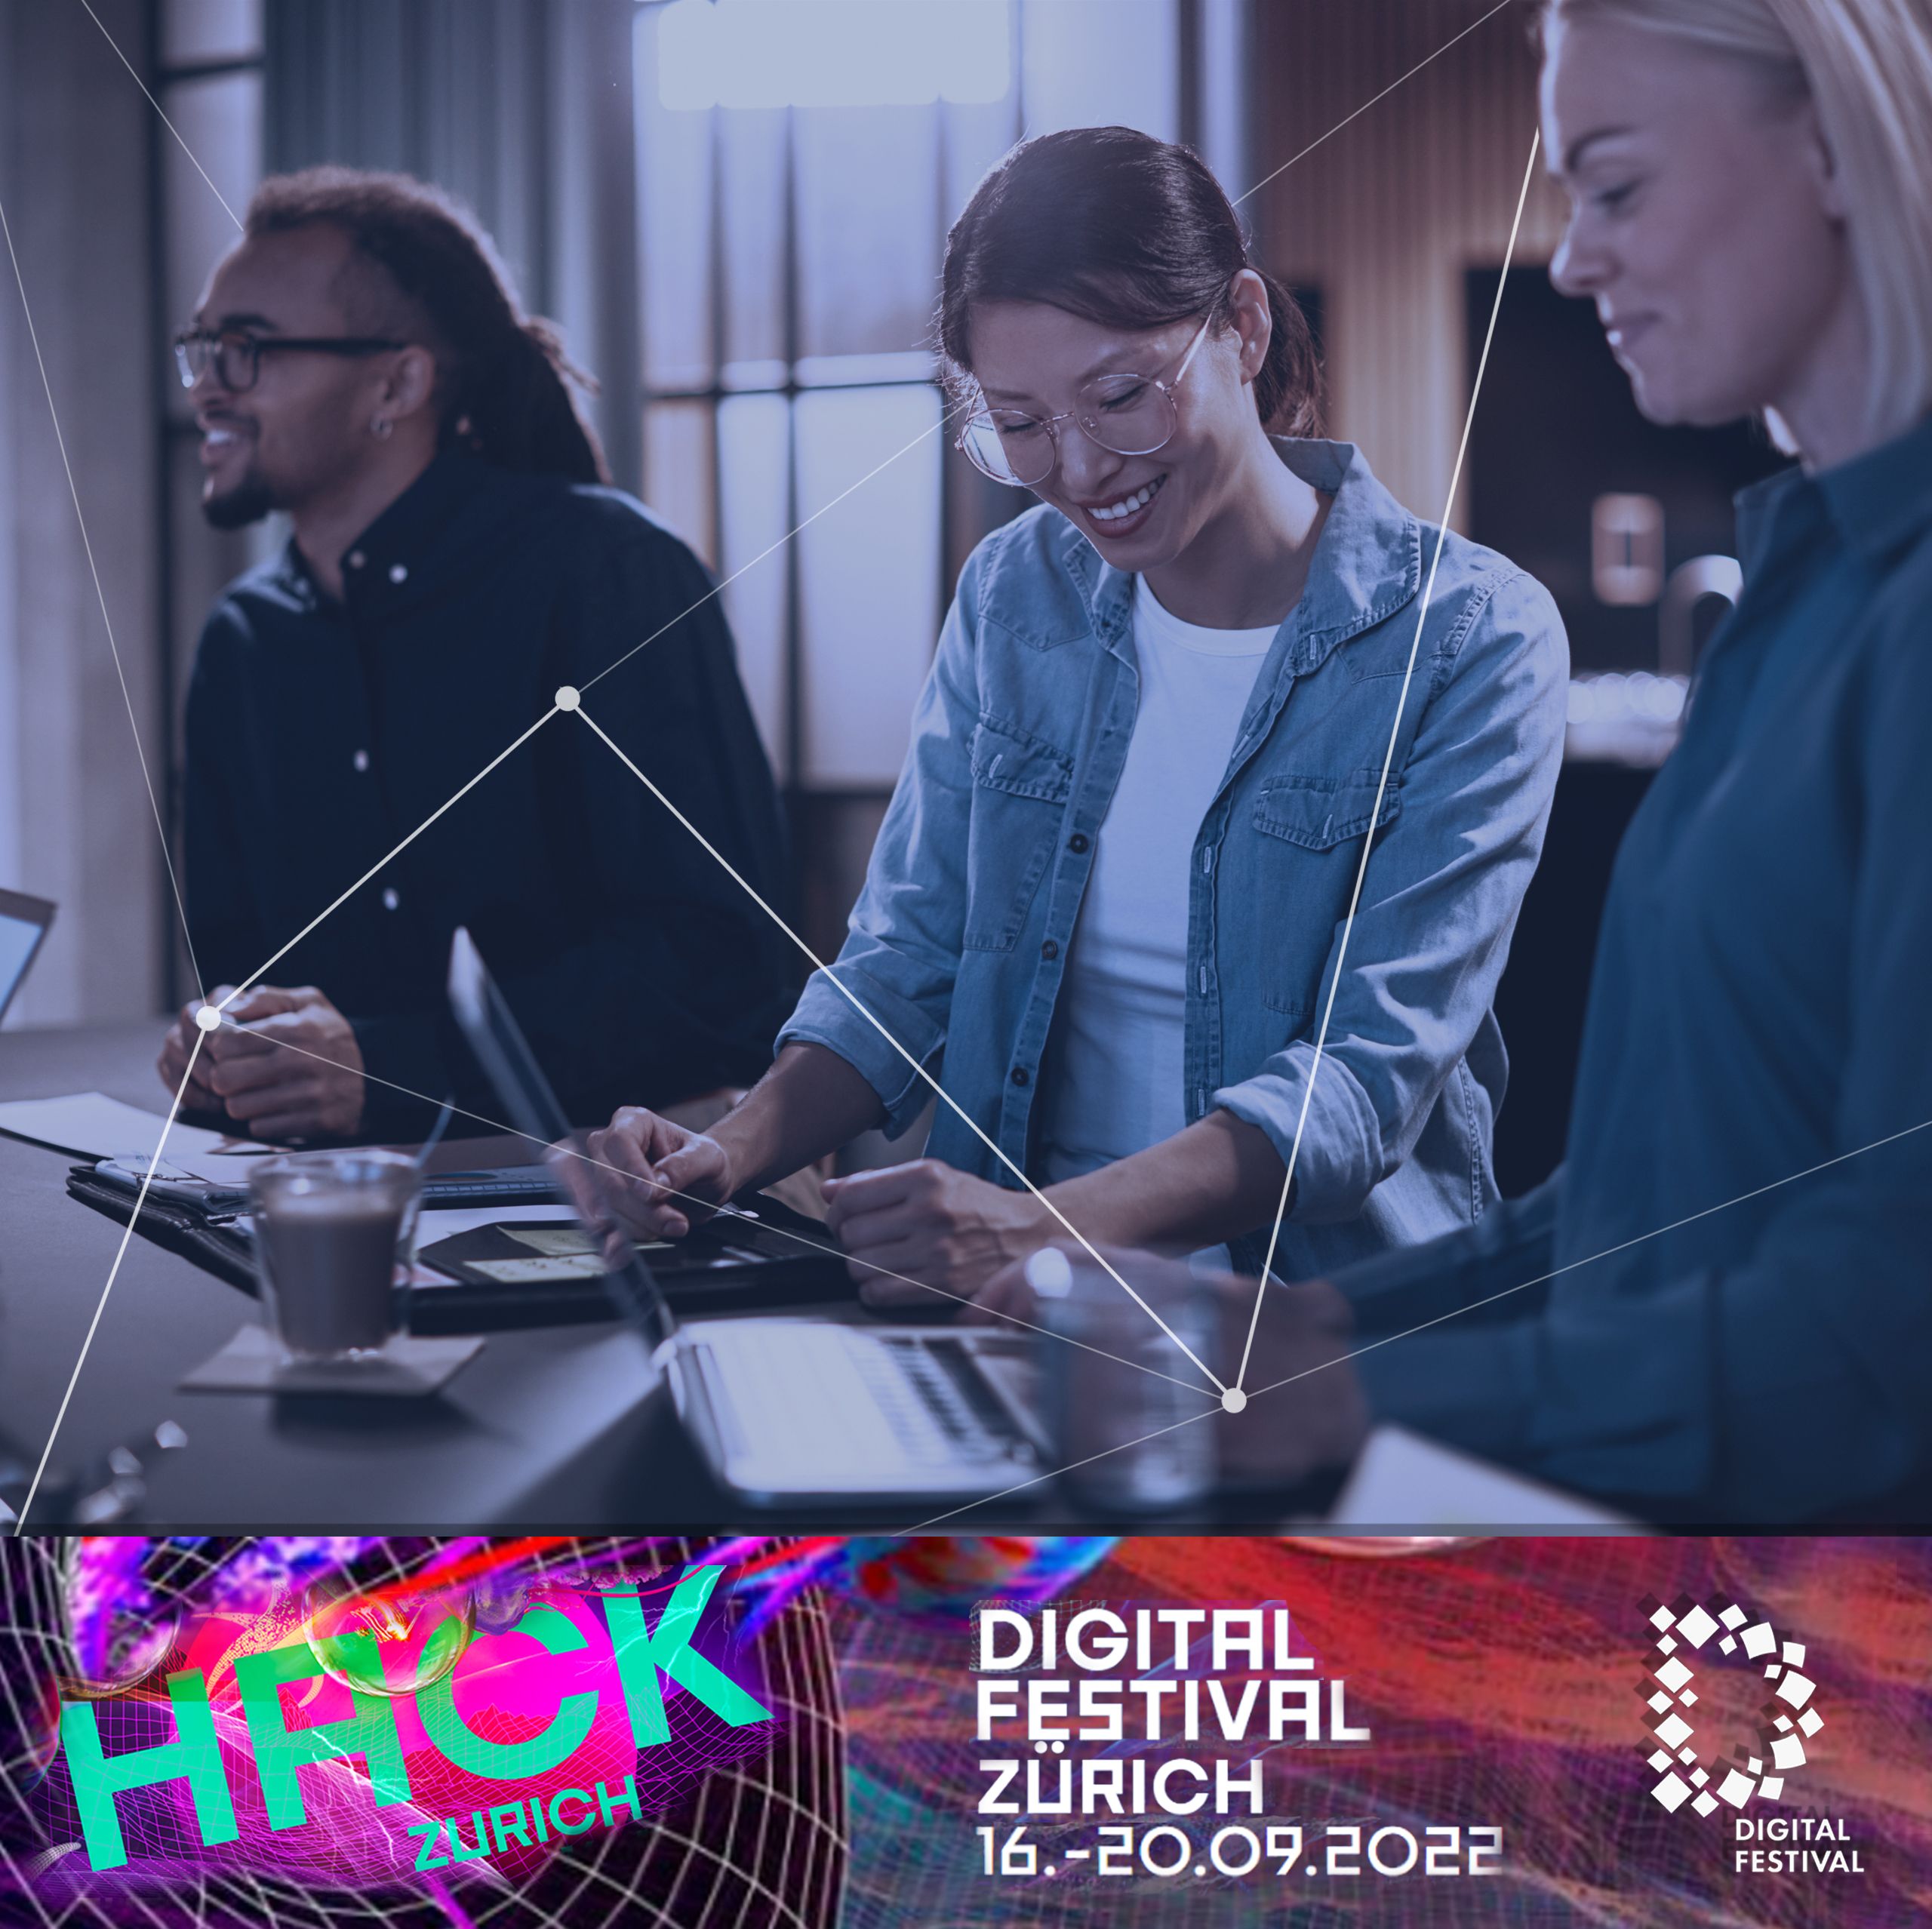 Blog_Digital Festival Zurich_Header_Merkle